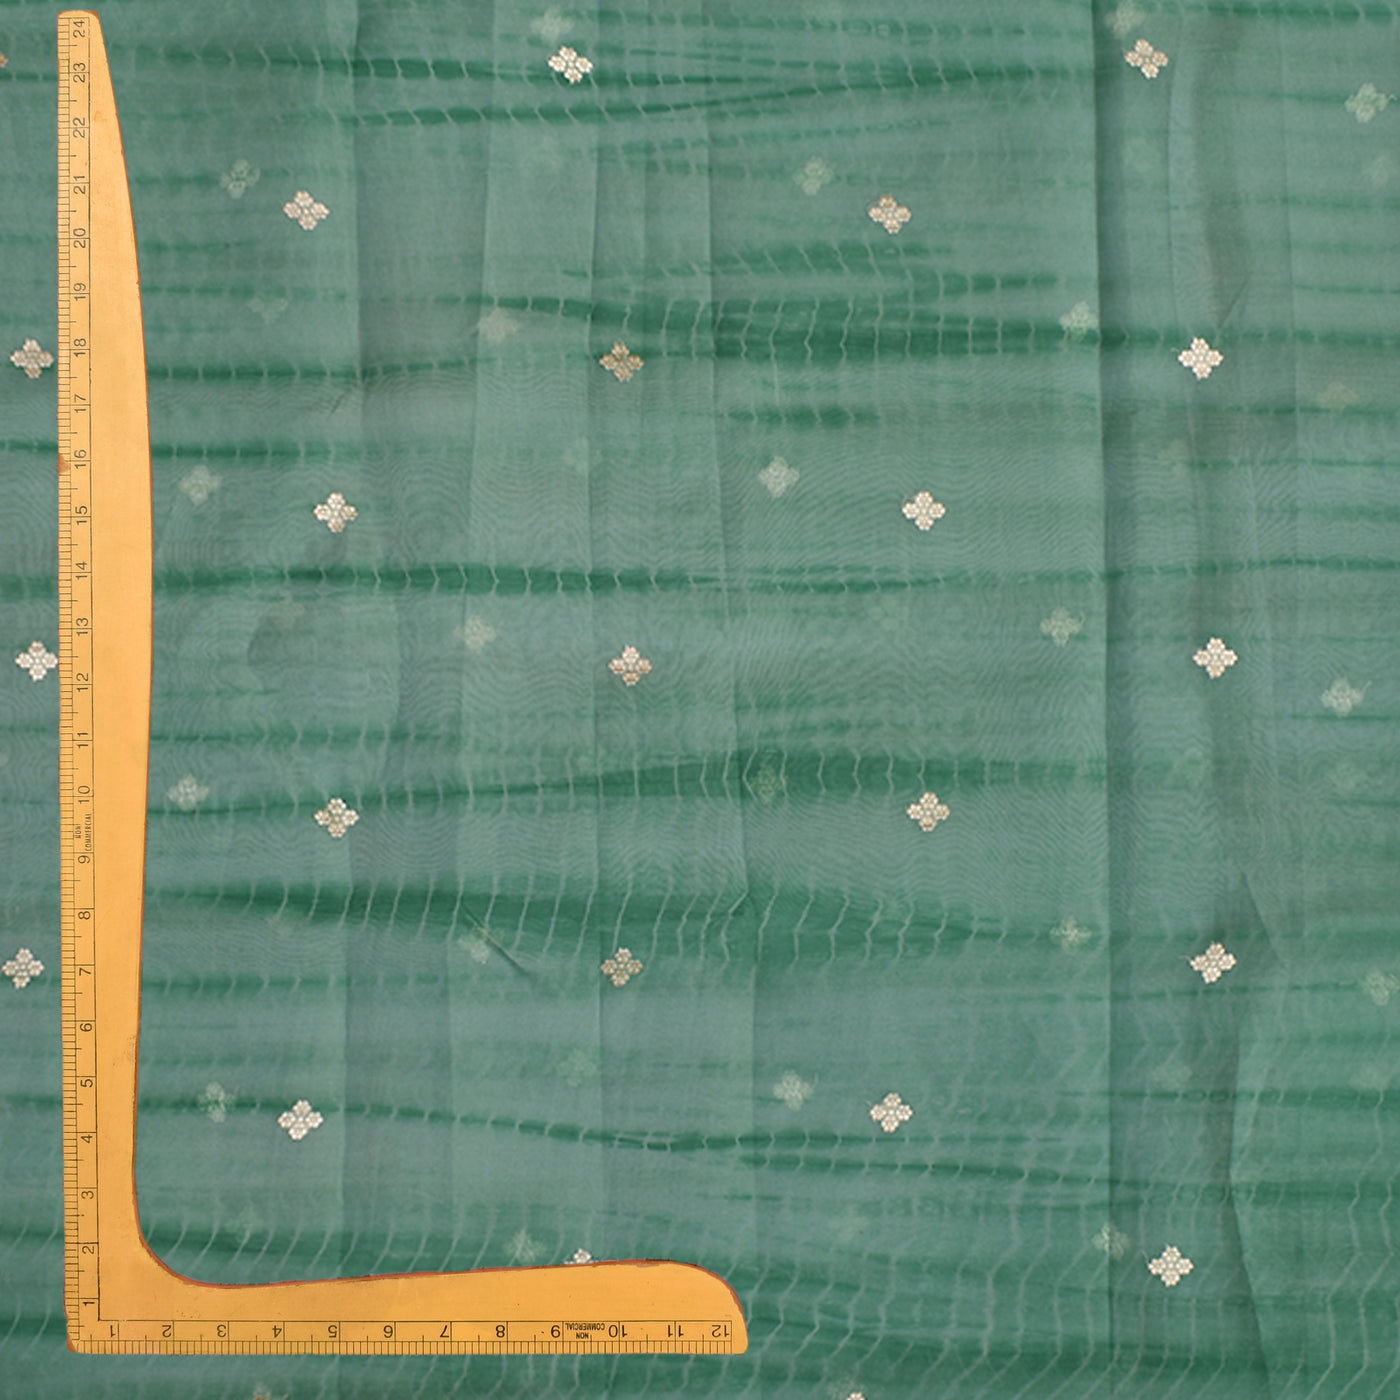 Mint Green Organza Fabric with Shibori Print Design